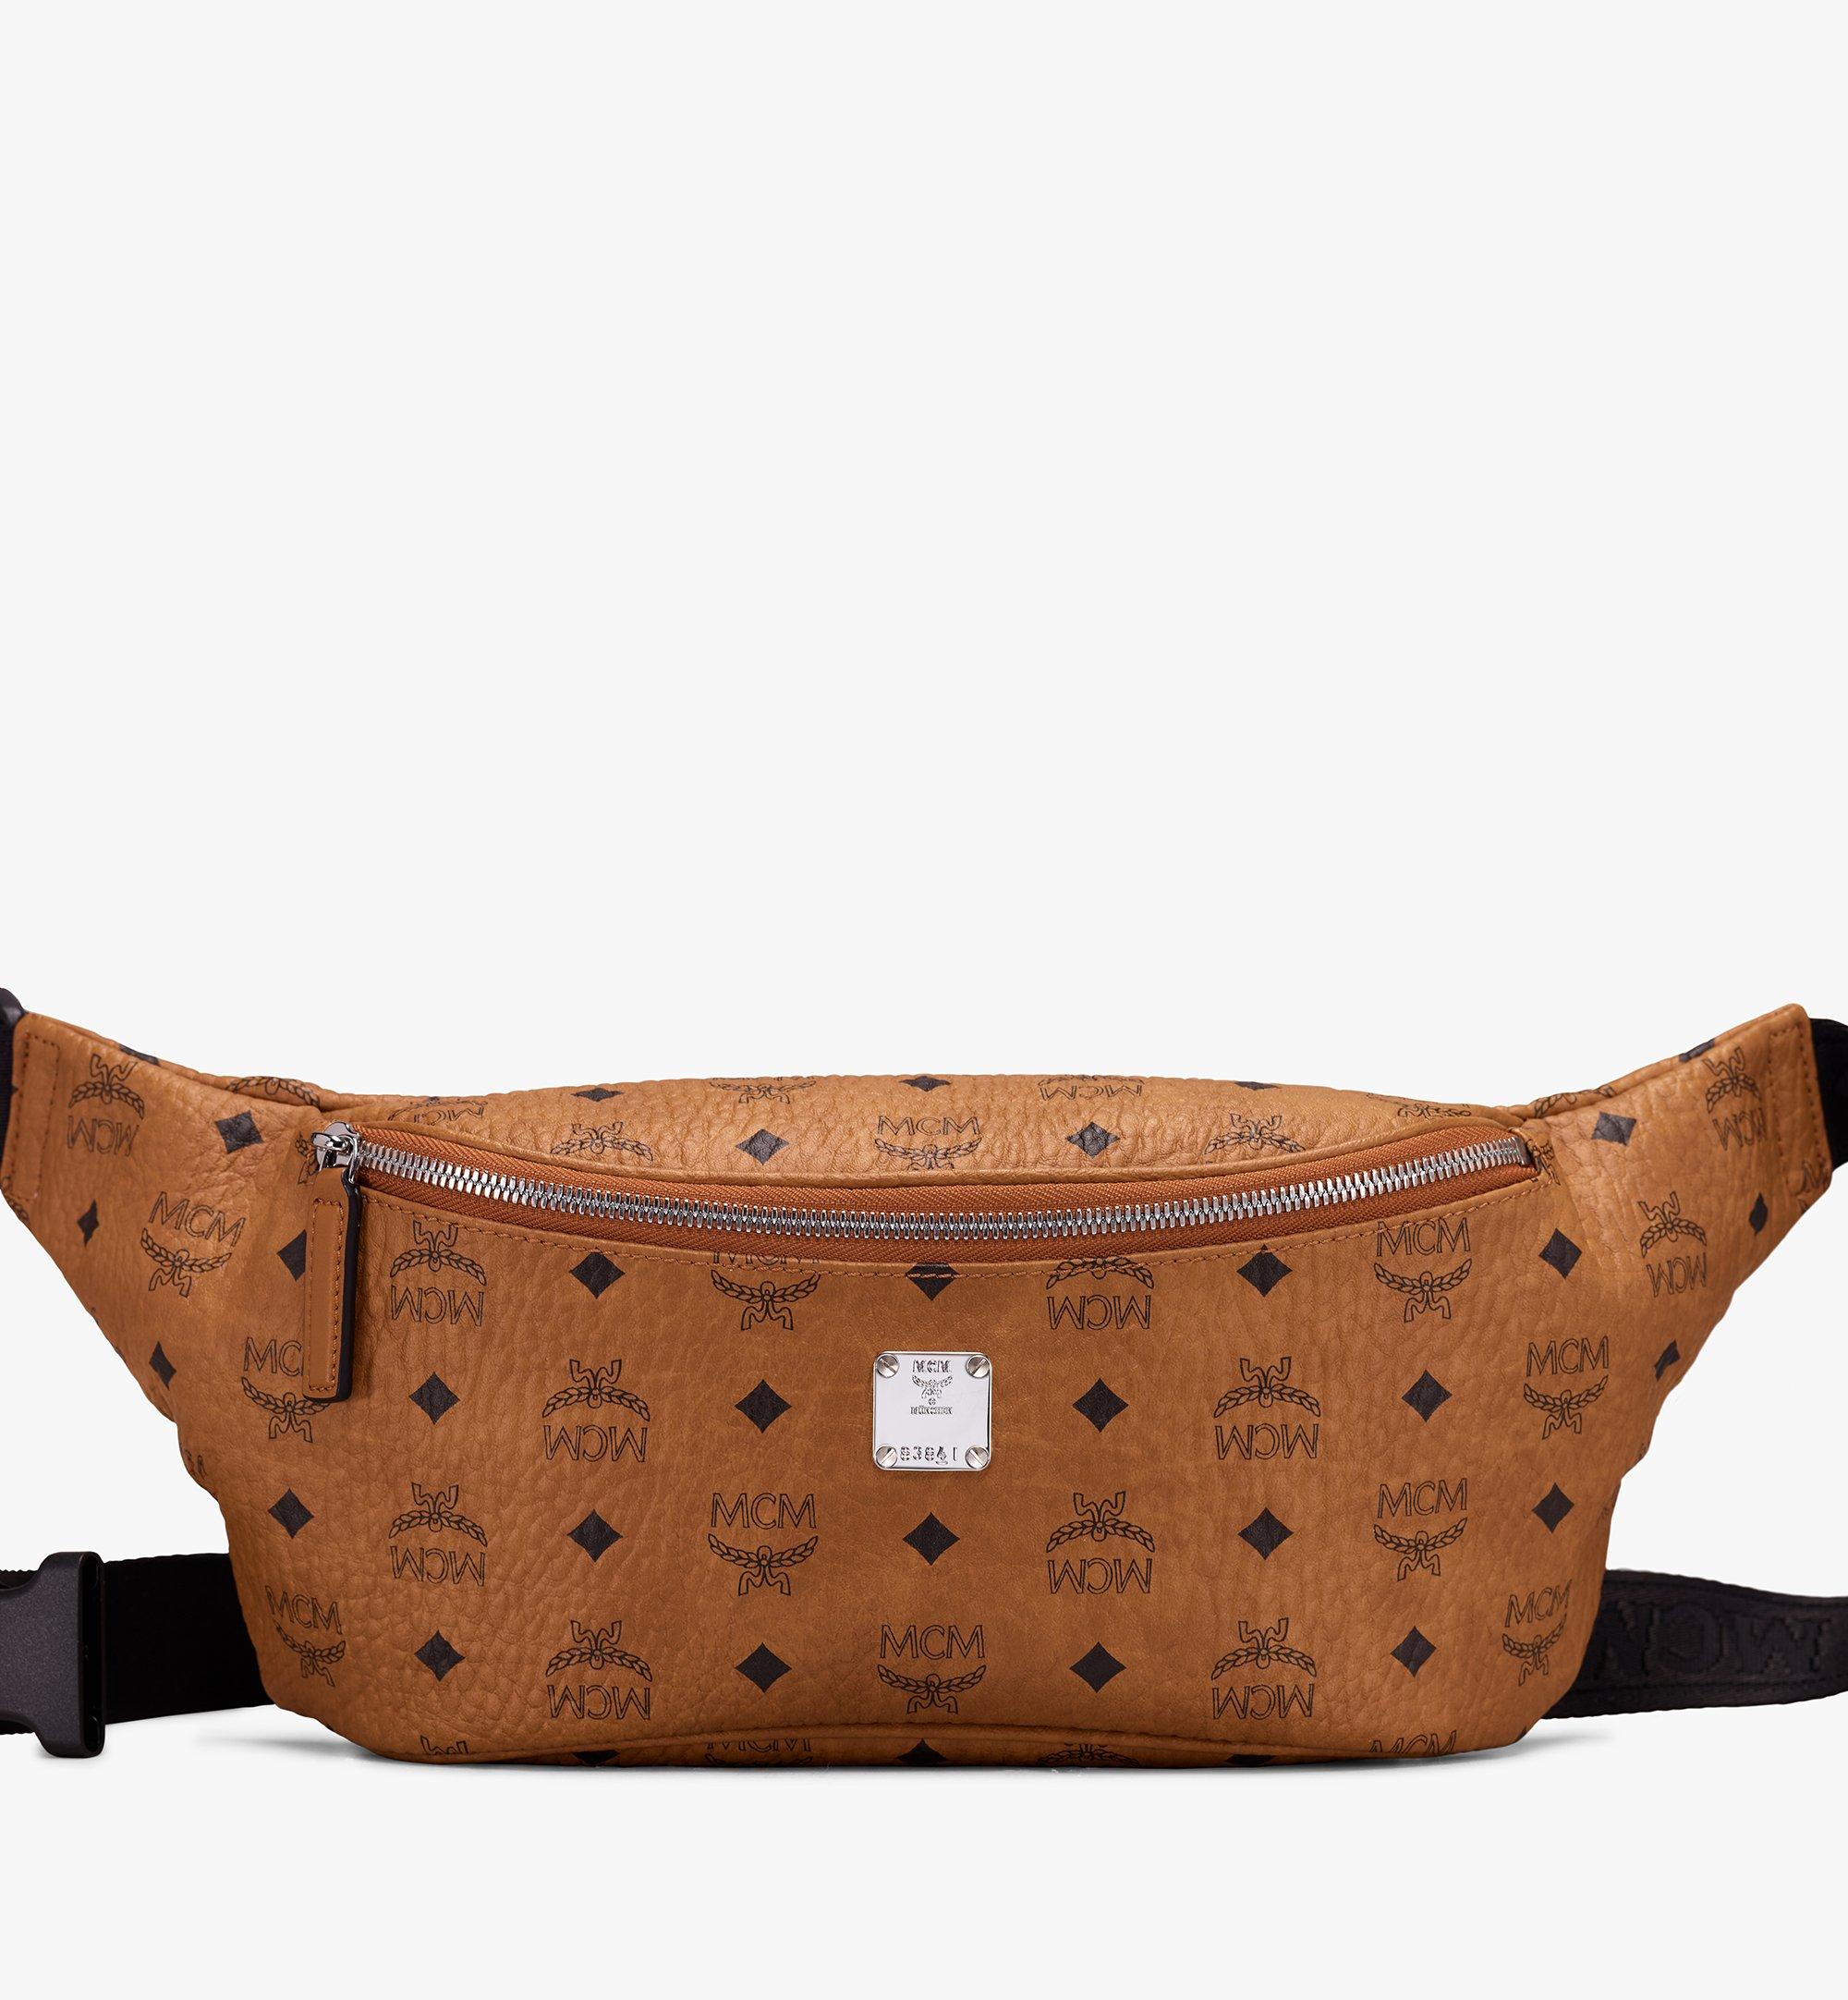 bag: Gucci Belt Bag Price In Nepal